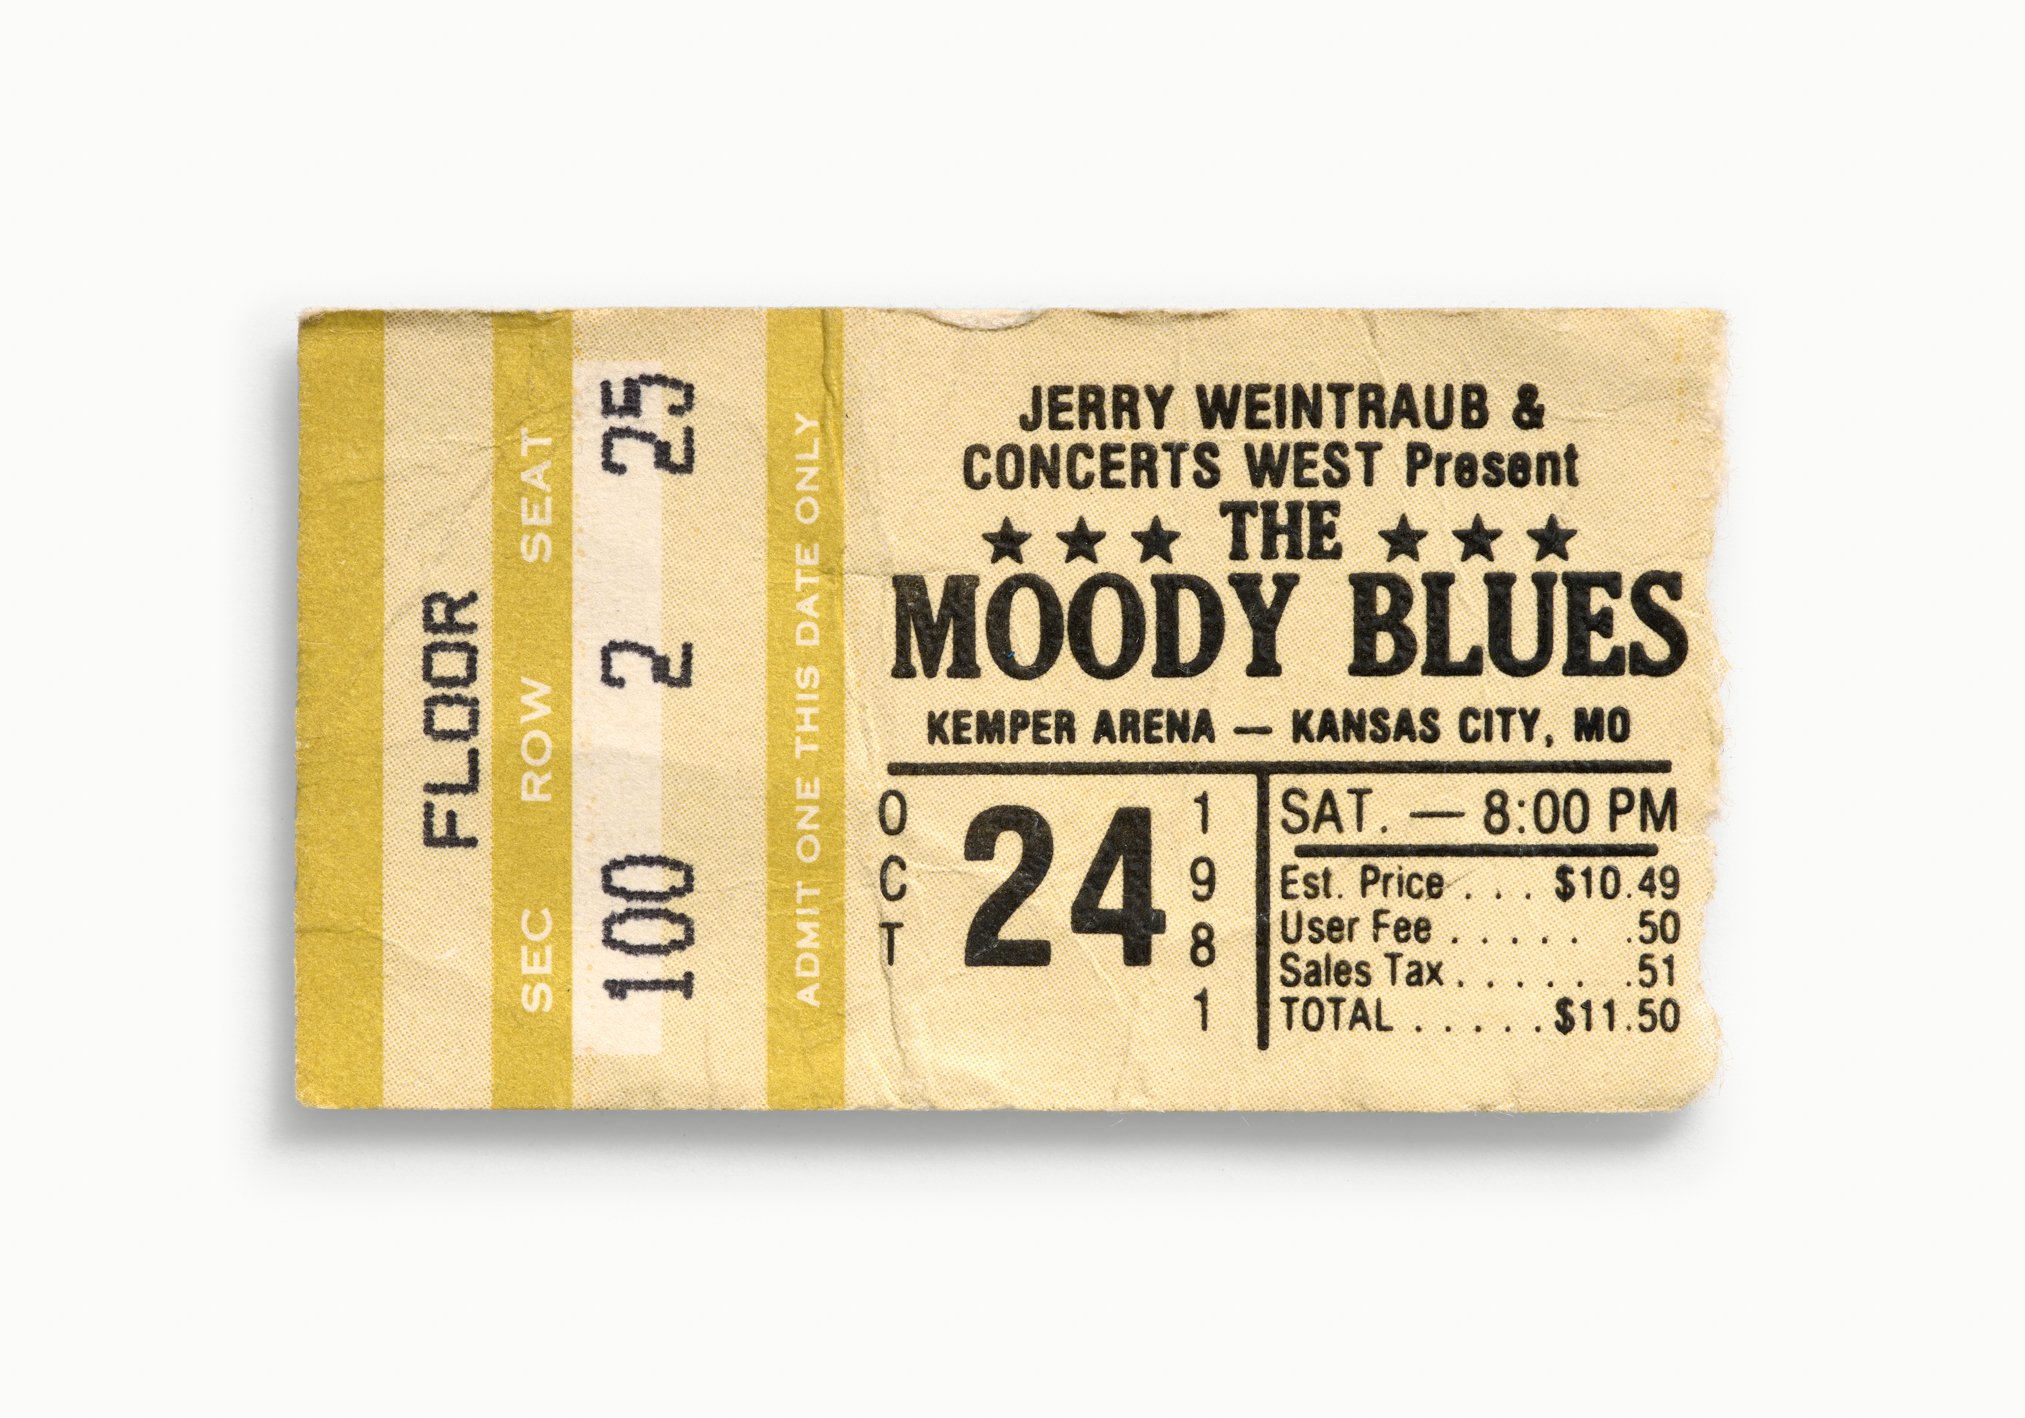 The Moody Blues, Kemper Arena, Kansas City, MO 1981